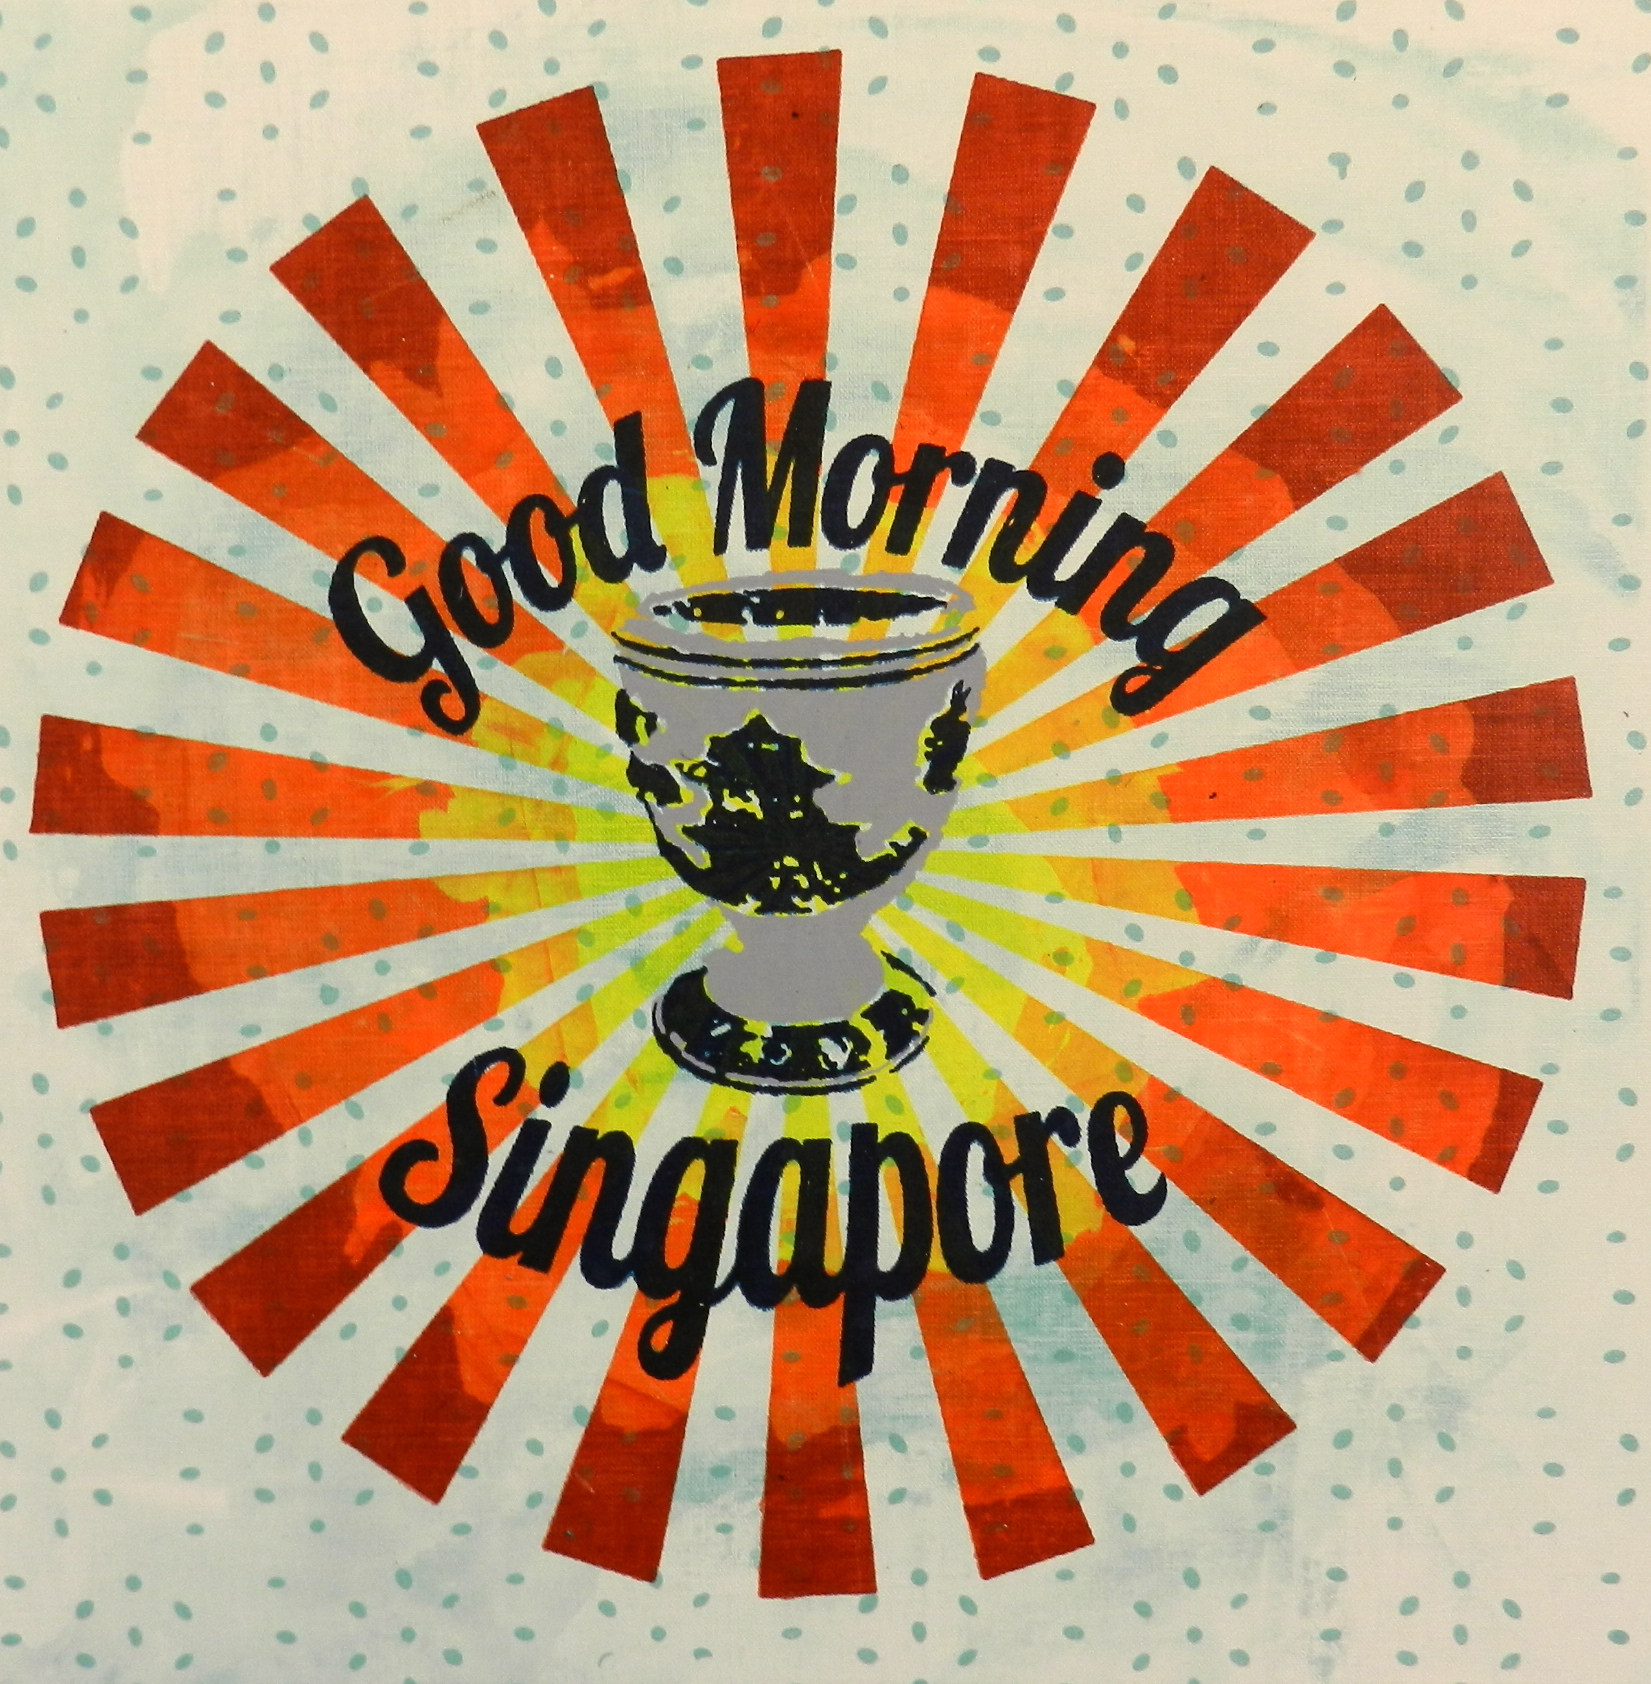 Good Morning Singapore.JPG